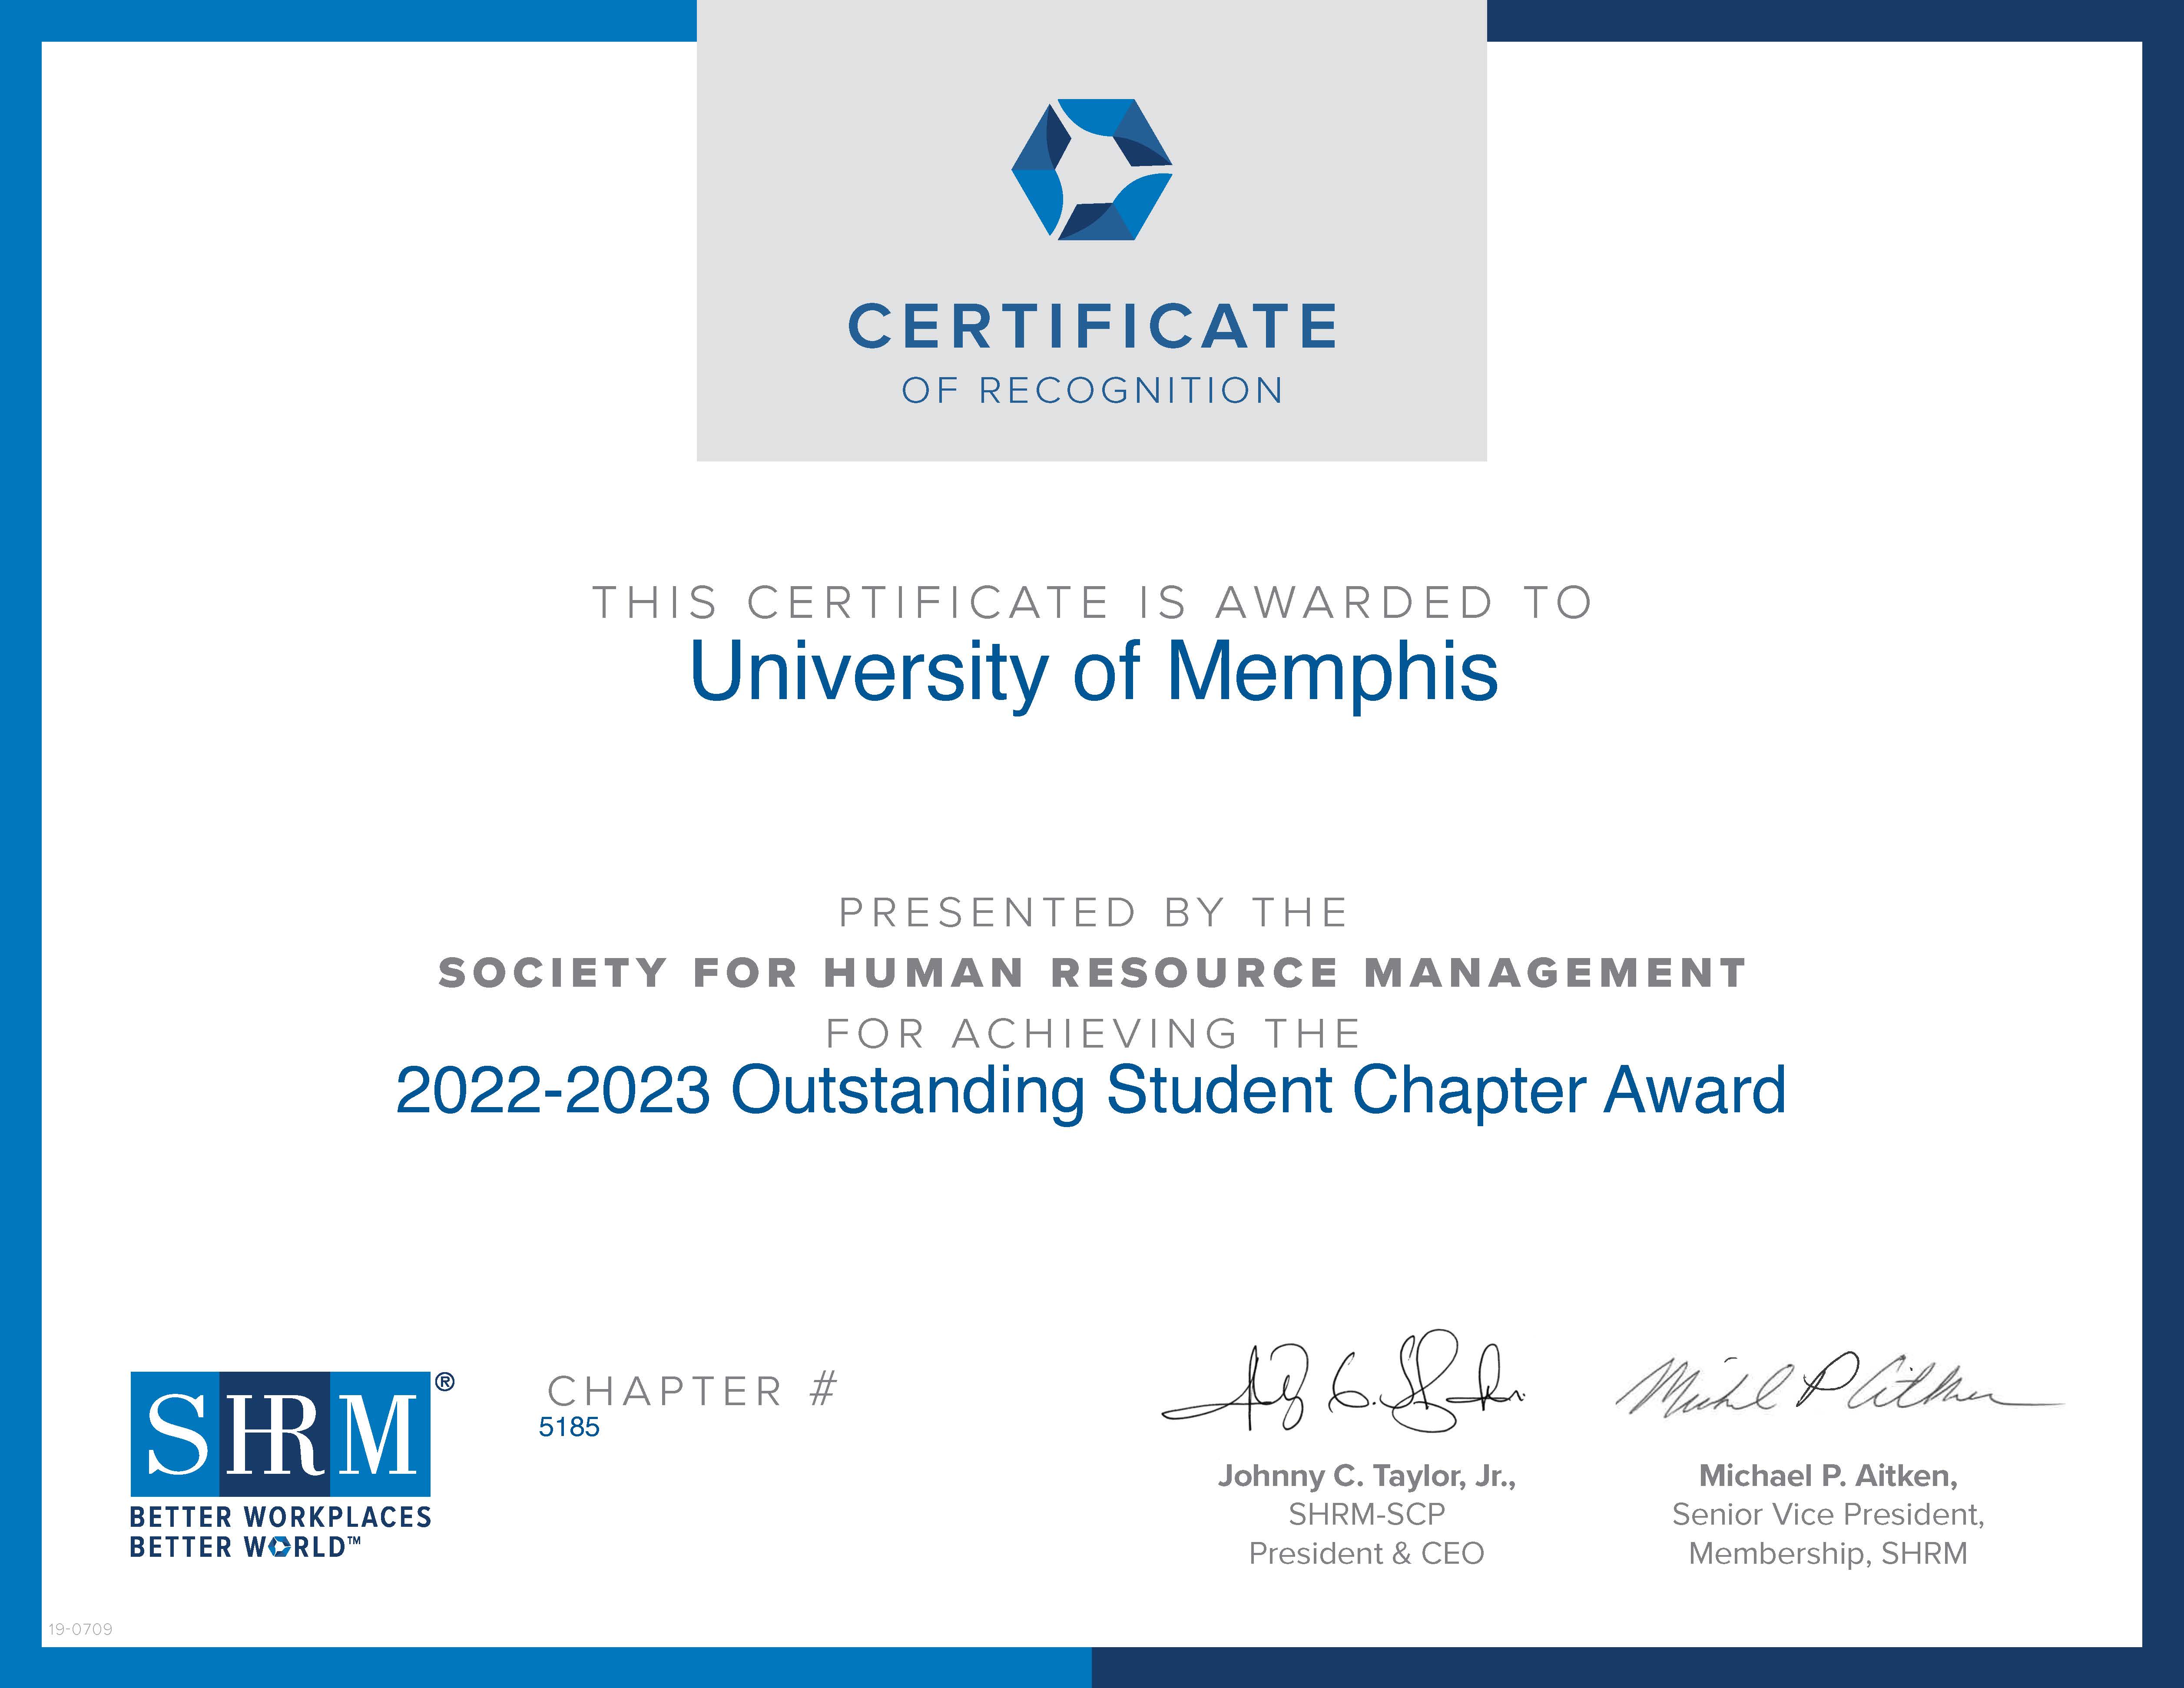 SHRM Merit Award